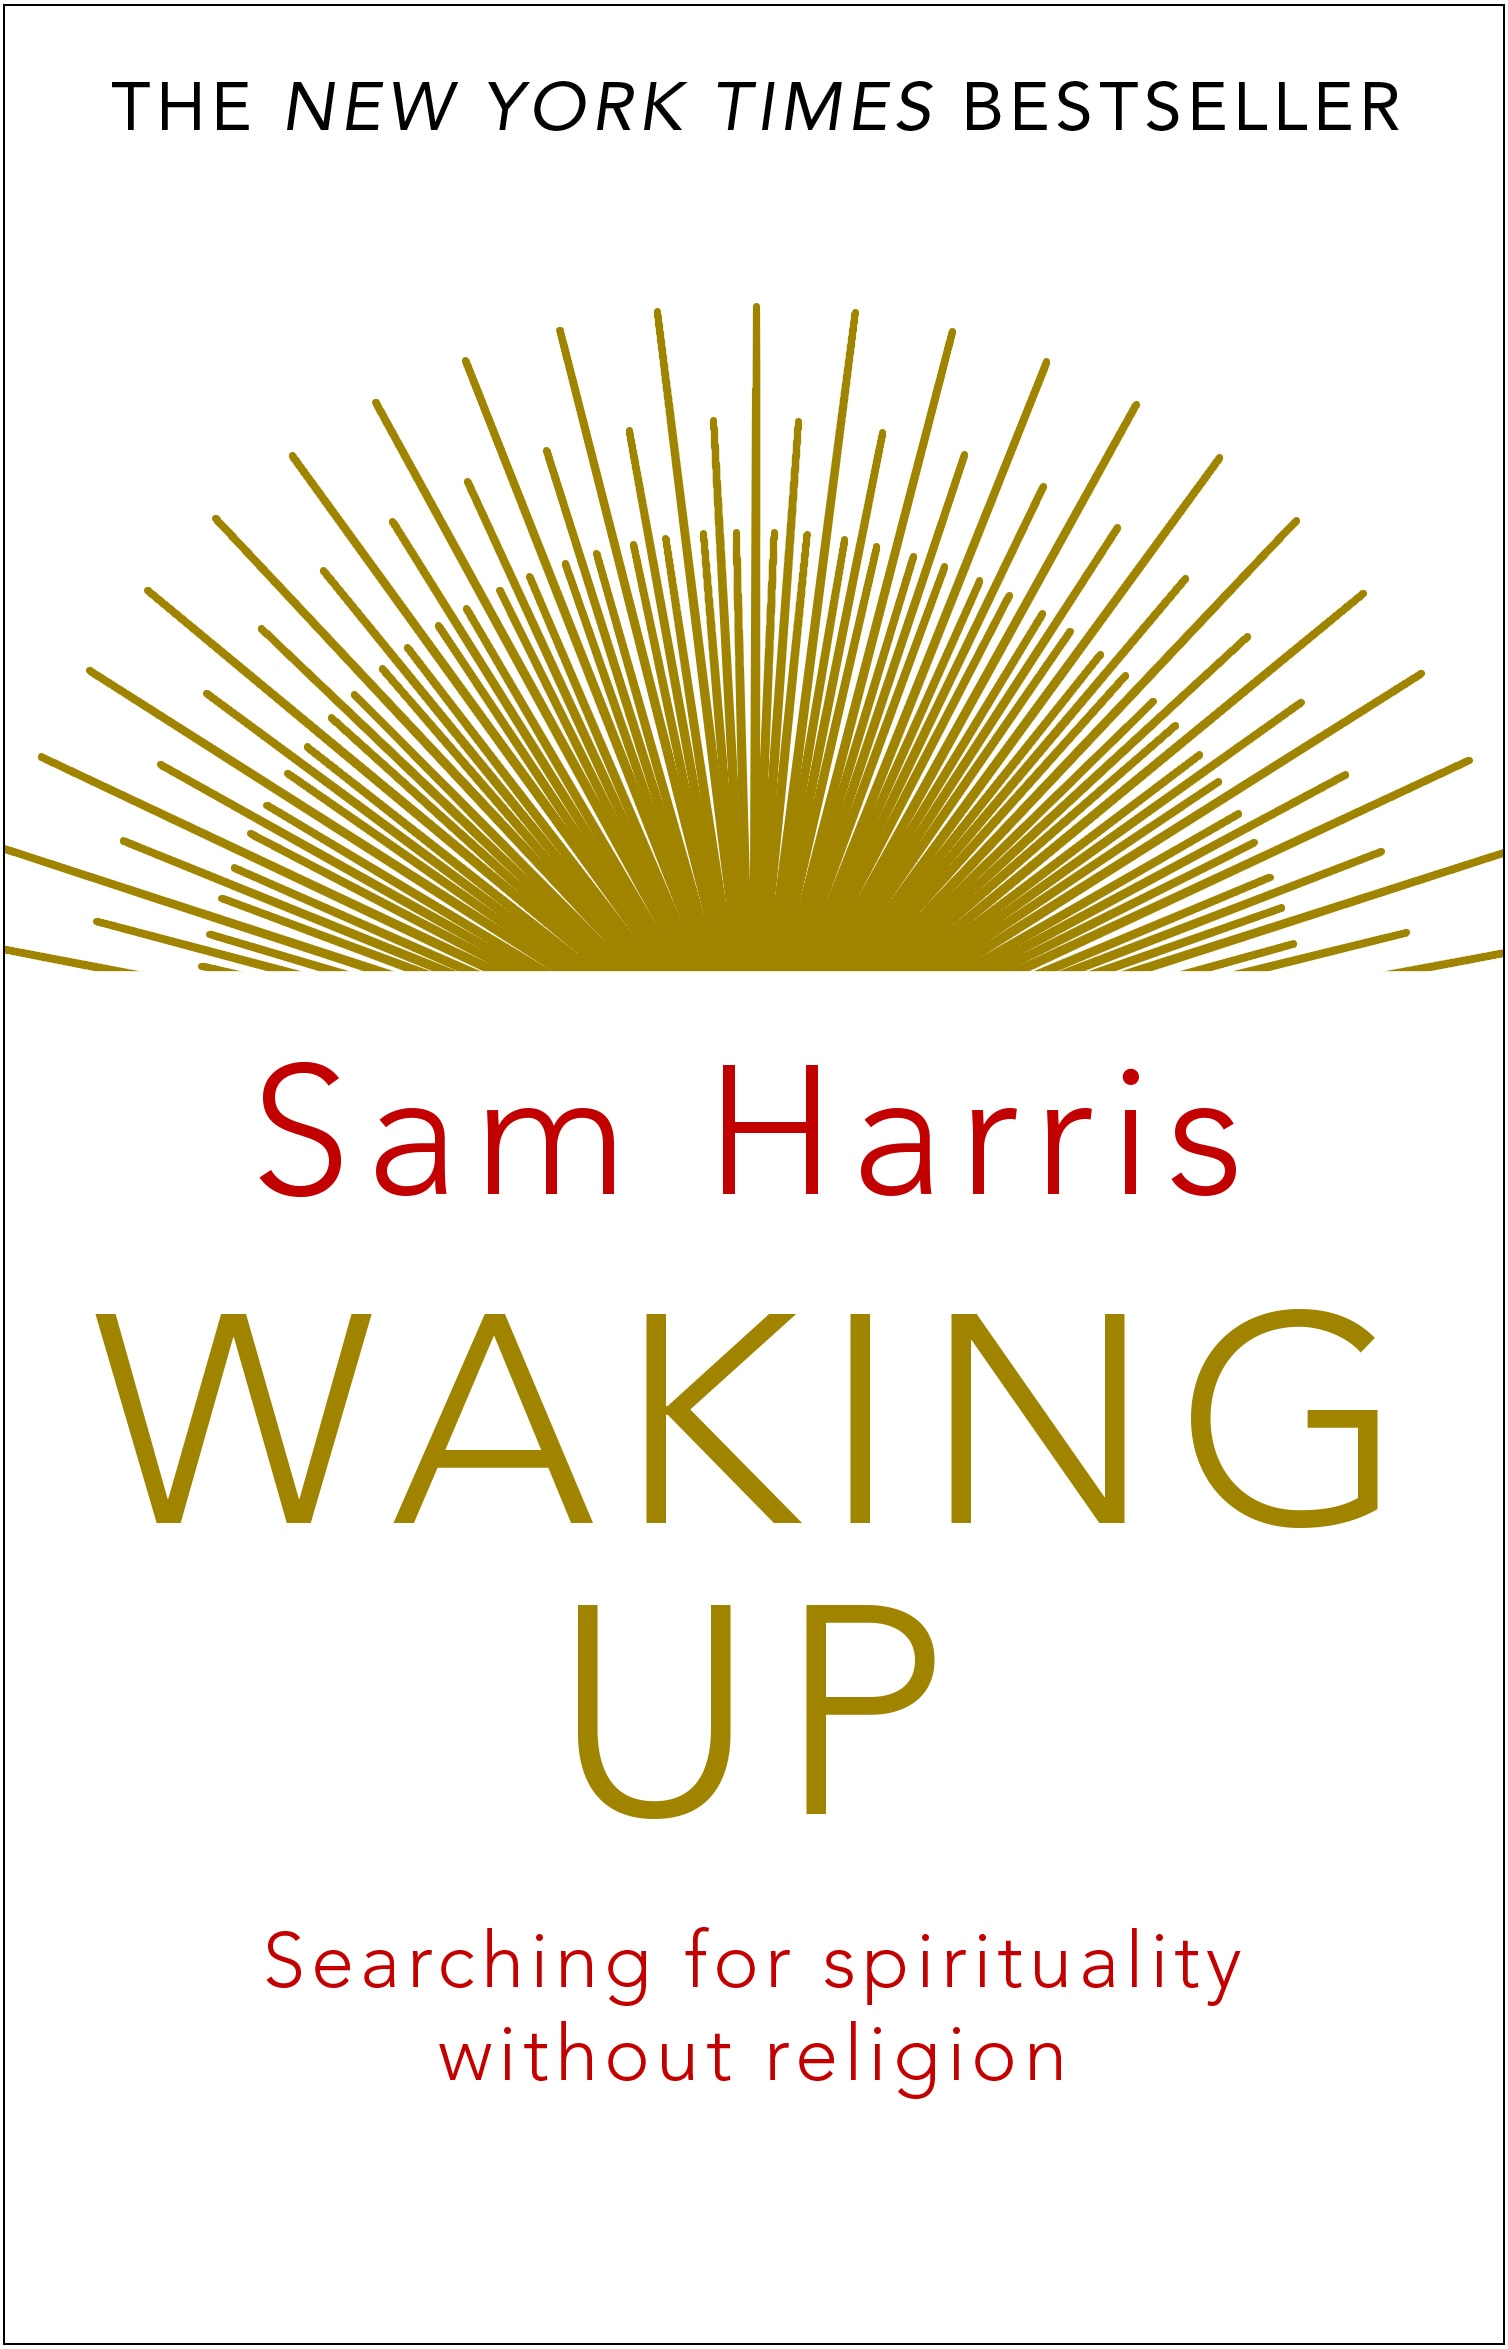 Book “Waking Up” by Sam Harris — September 10, 2015